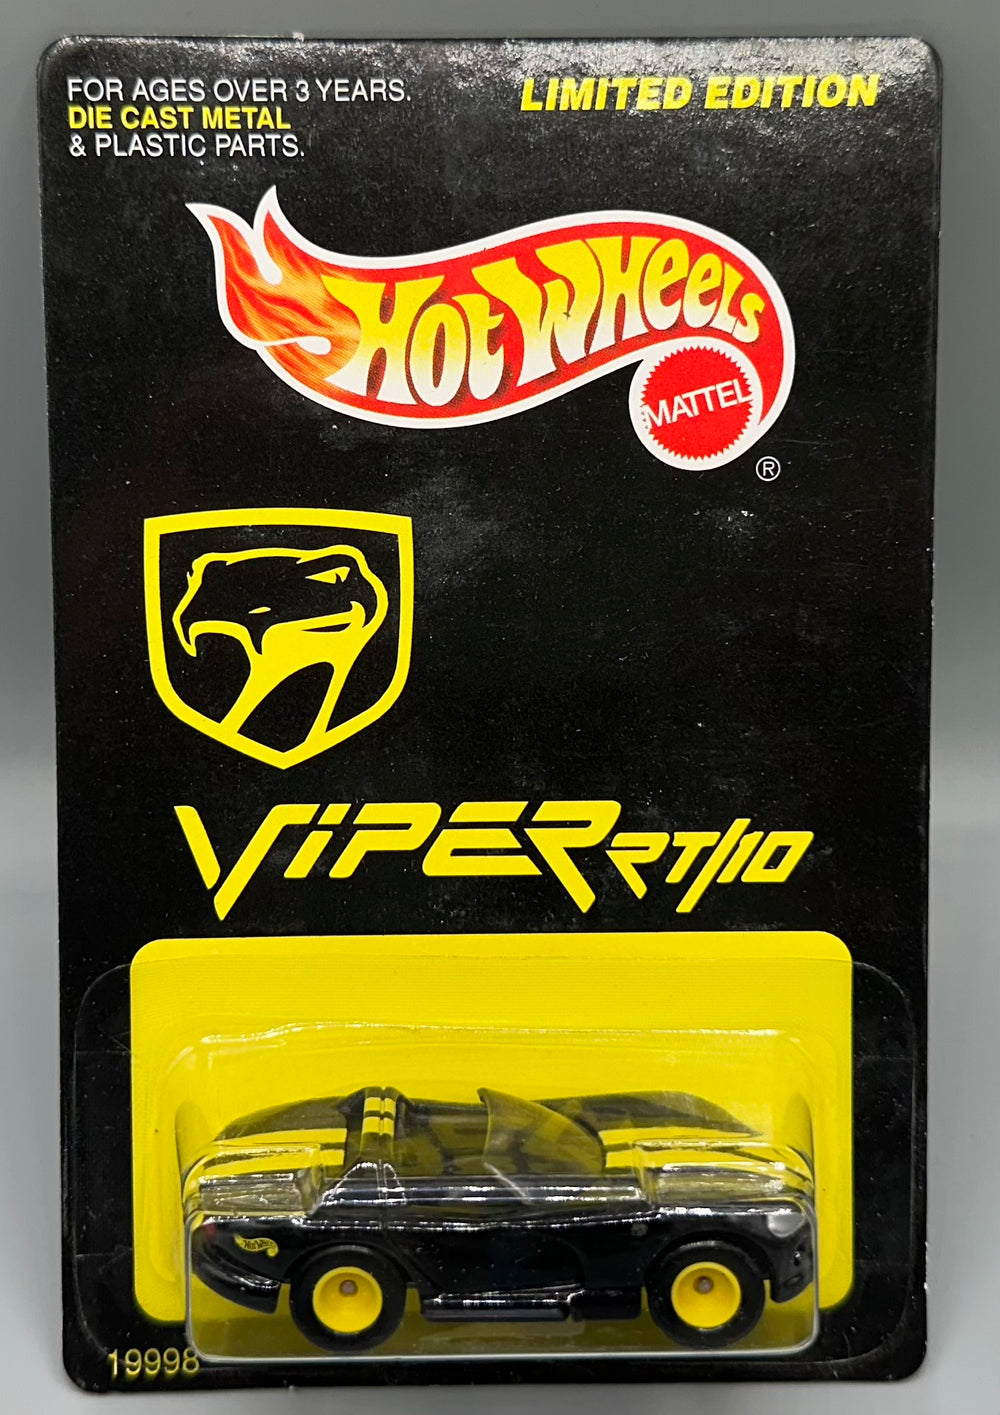 Hot Wheels Dodge Viper RT/10